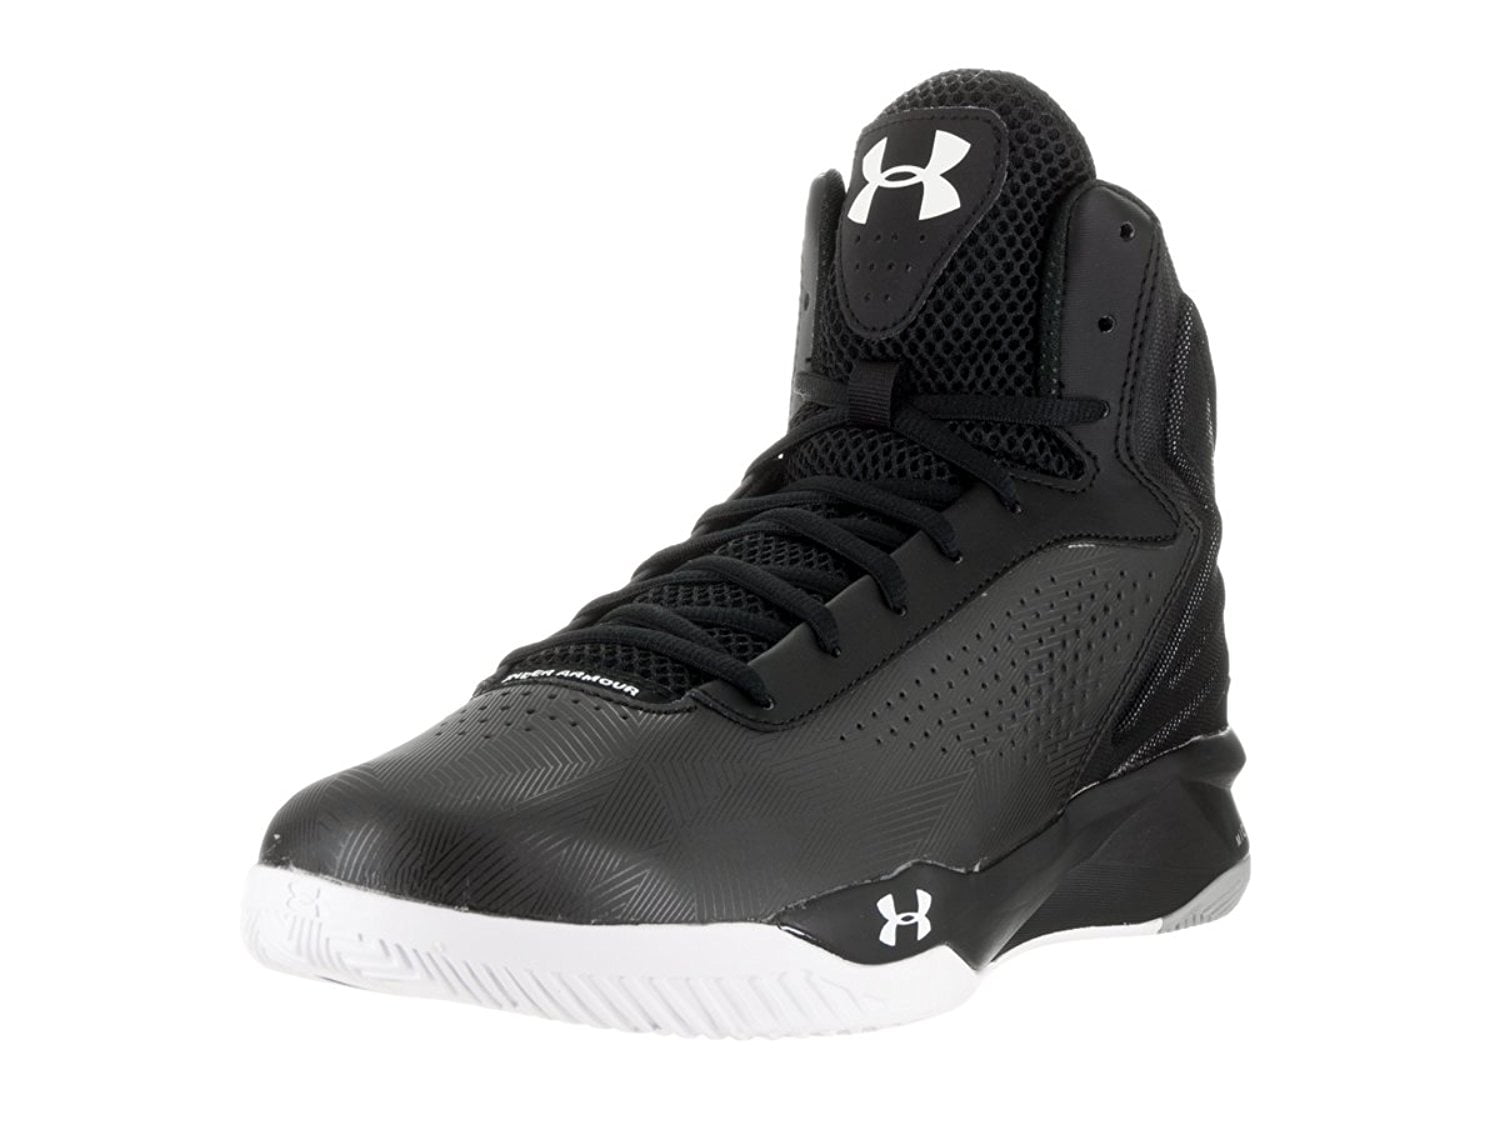 Under Armour Men's Micro G Torch Basketball Shoe, D Black/Black/White - Walmart.com